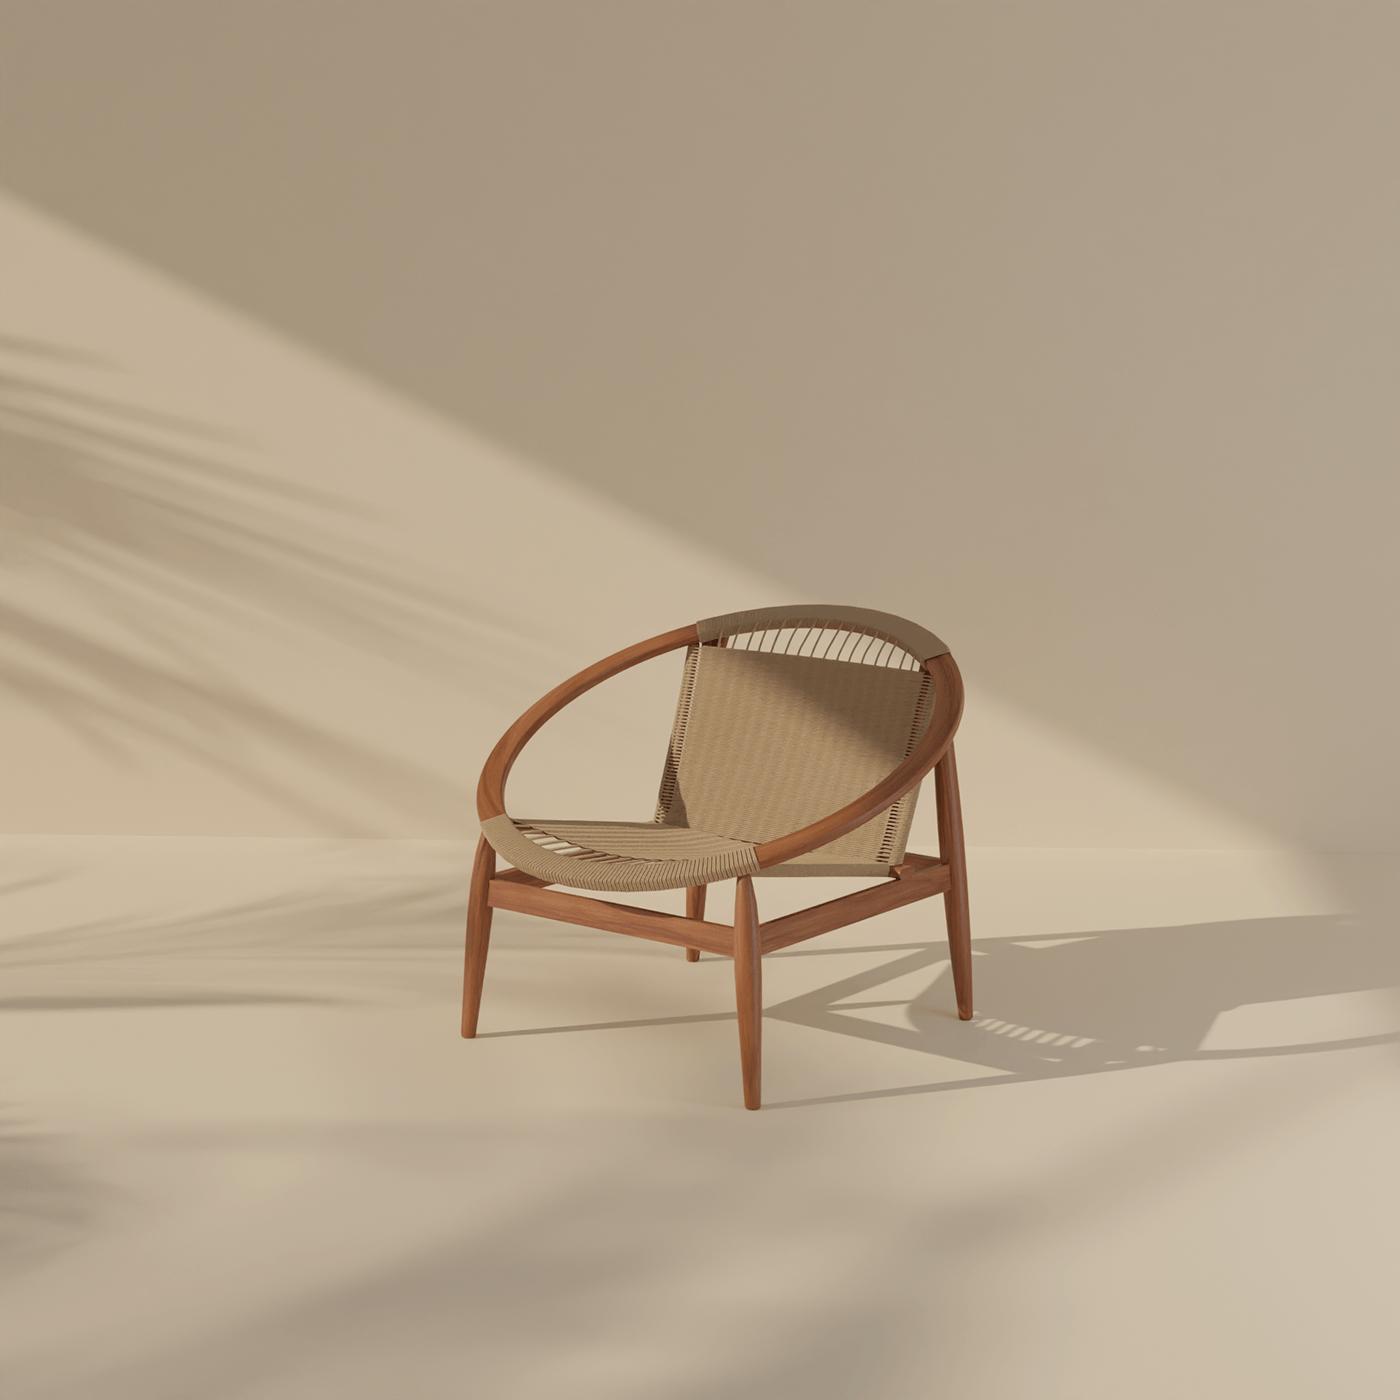 chair furniture interior design  visualization wood webbing chair design blender3d Cycles render 3d modeling